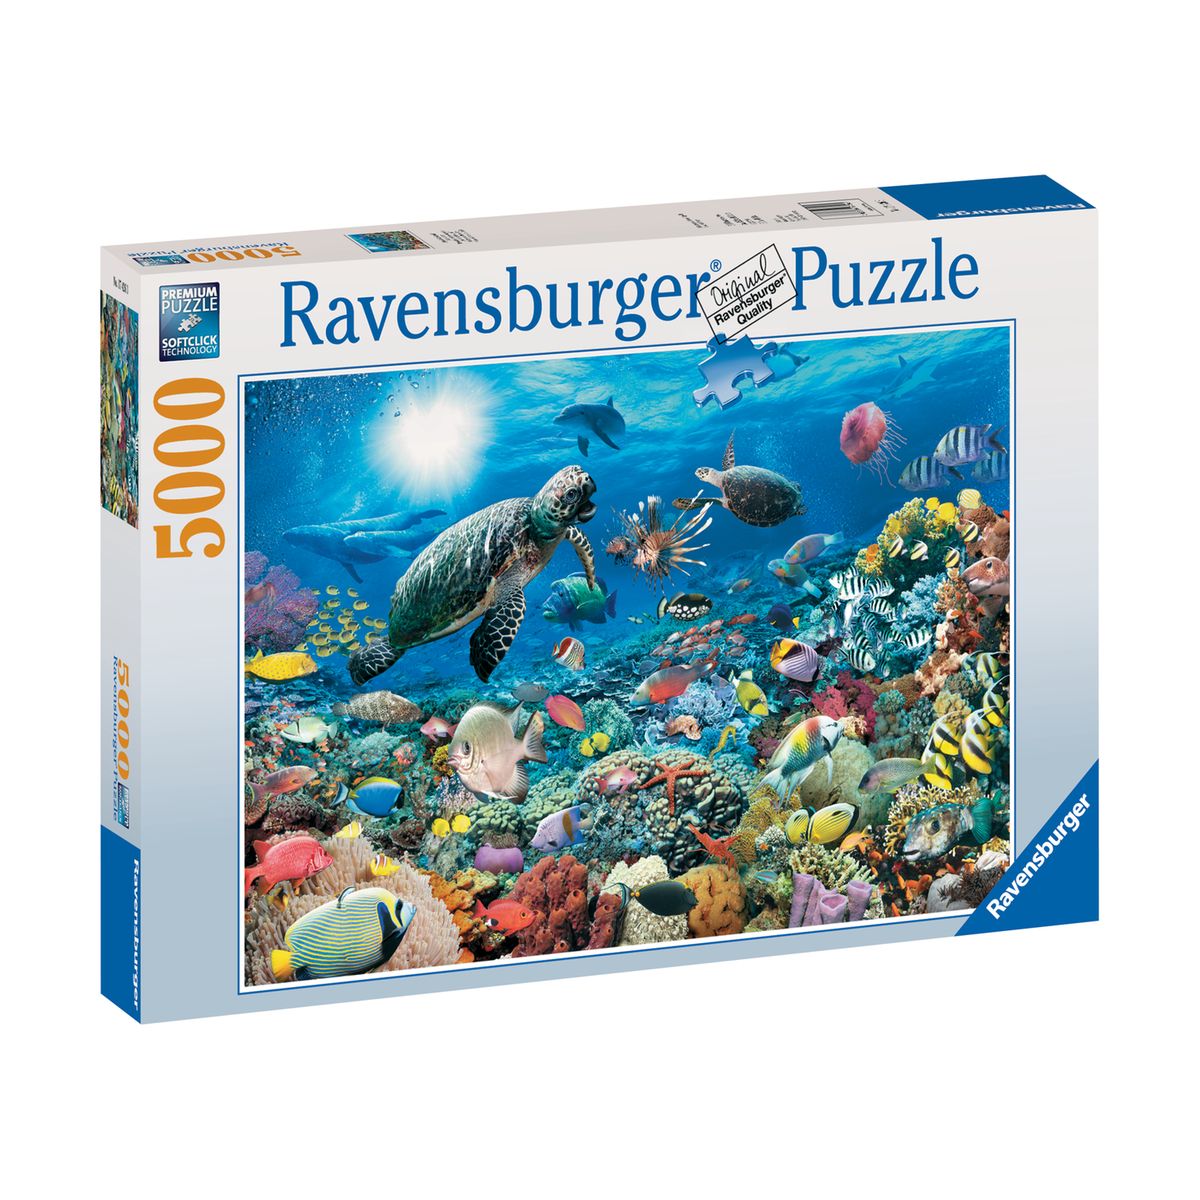 Ravensburger - puzzle adulte - puzzle 5000 p - monde marin - 17426  Ravensburger